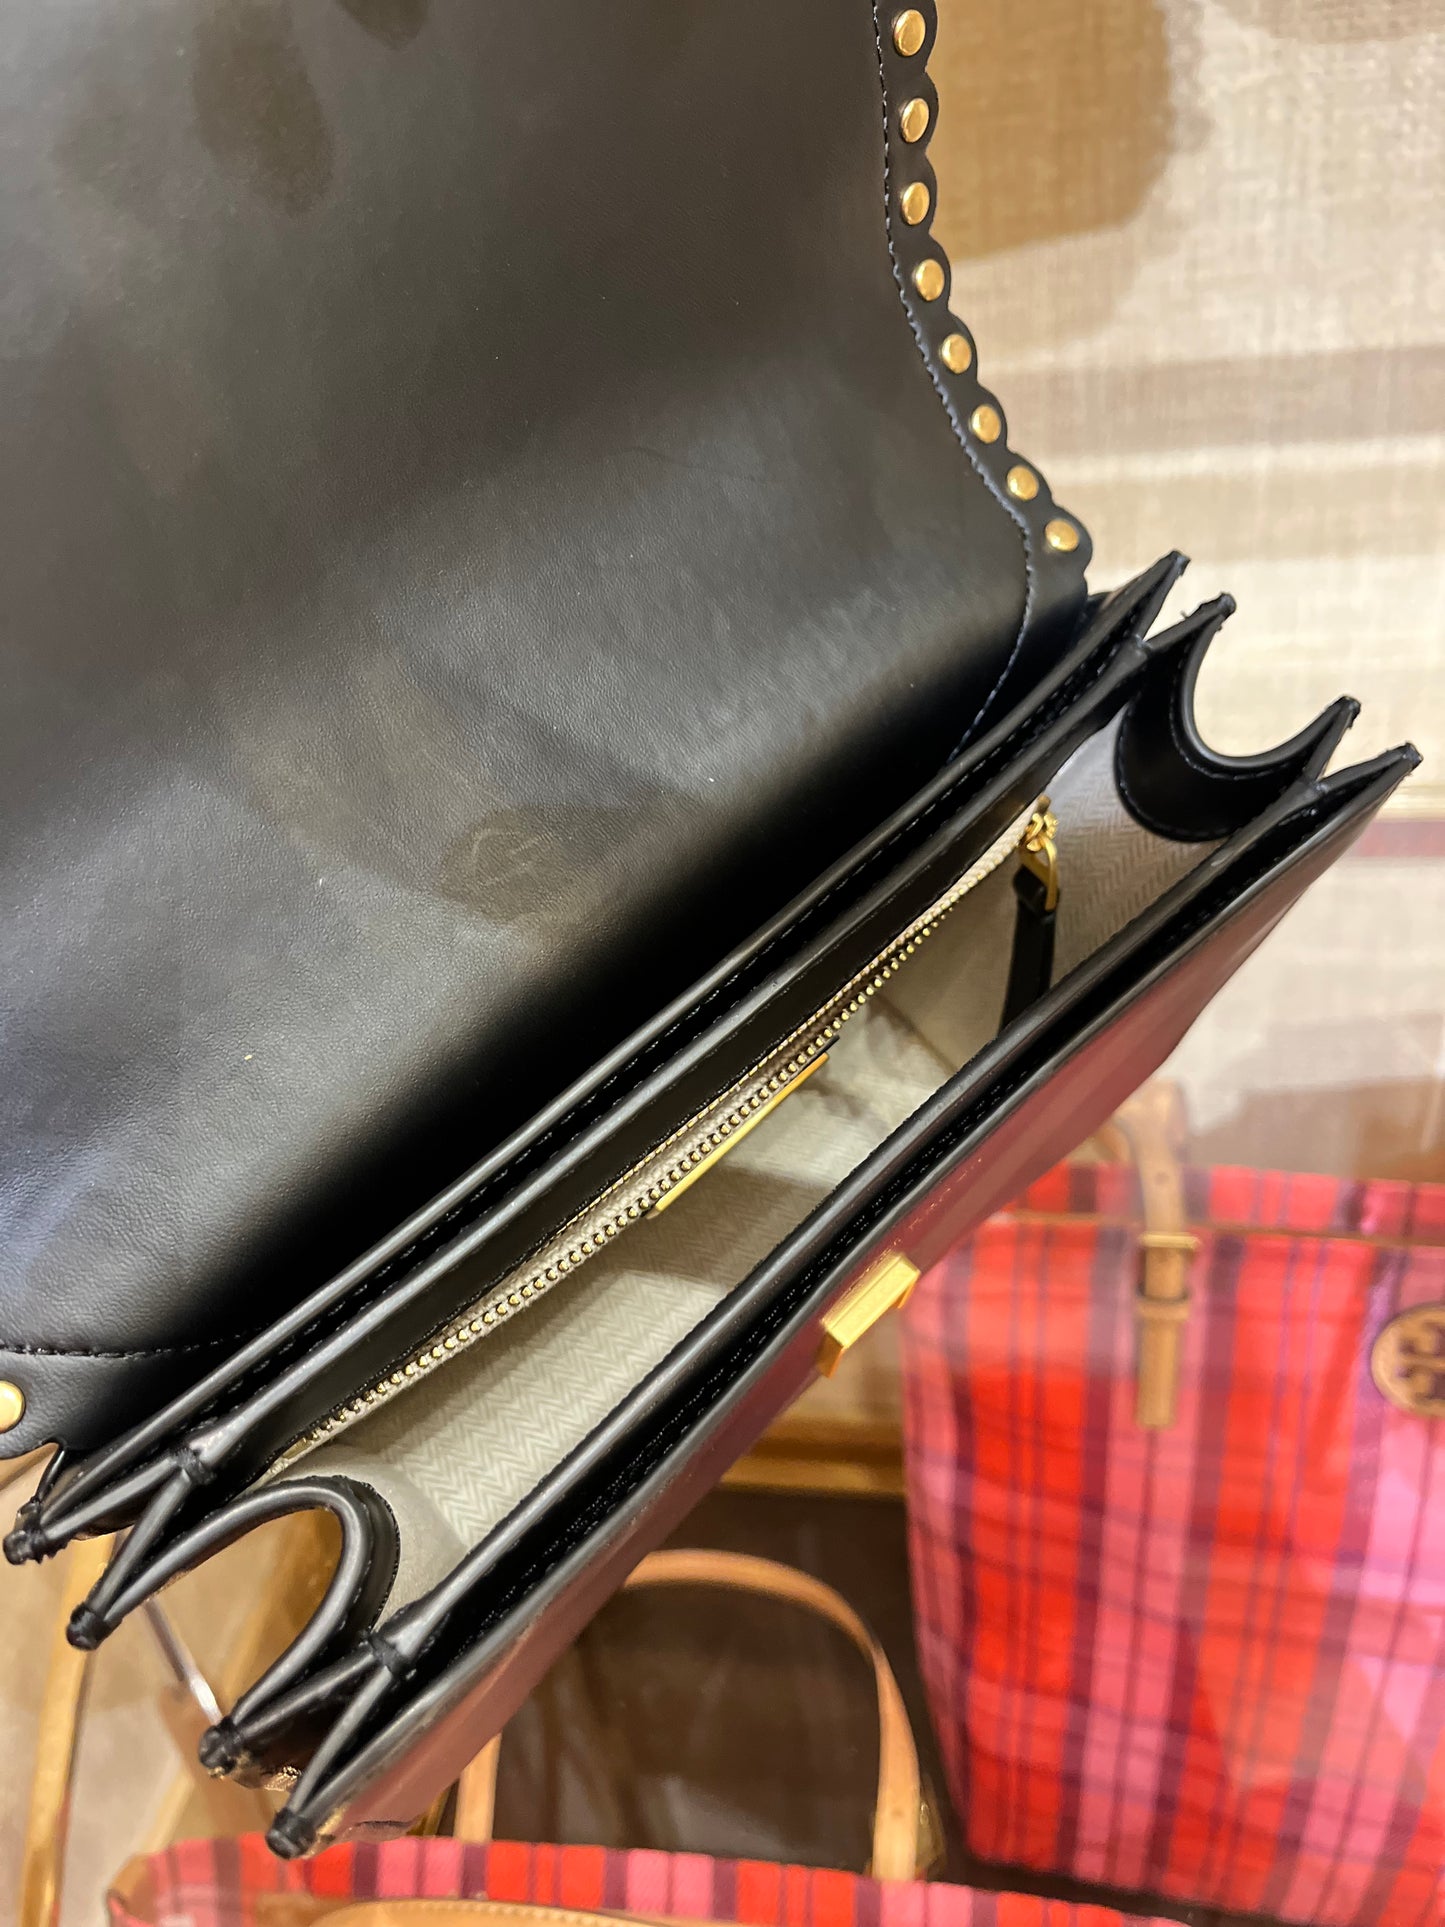 Tory Burch Britten Studded Small Adjustable Shoulder Bag, Black, Retail $598